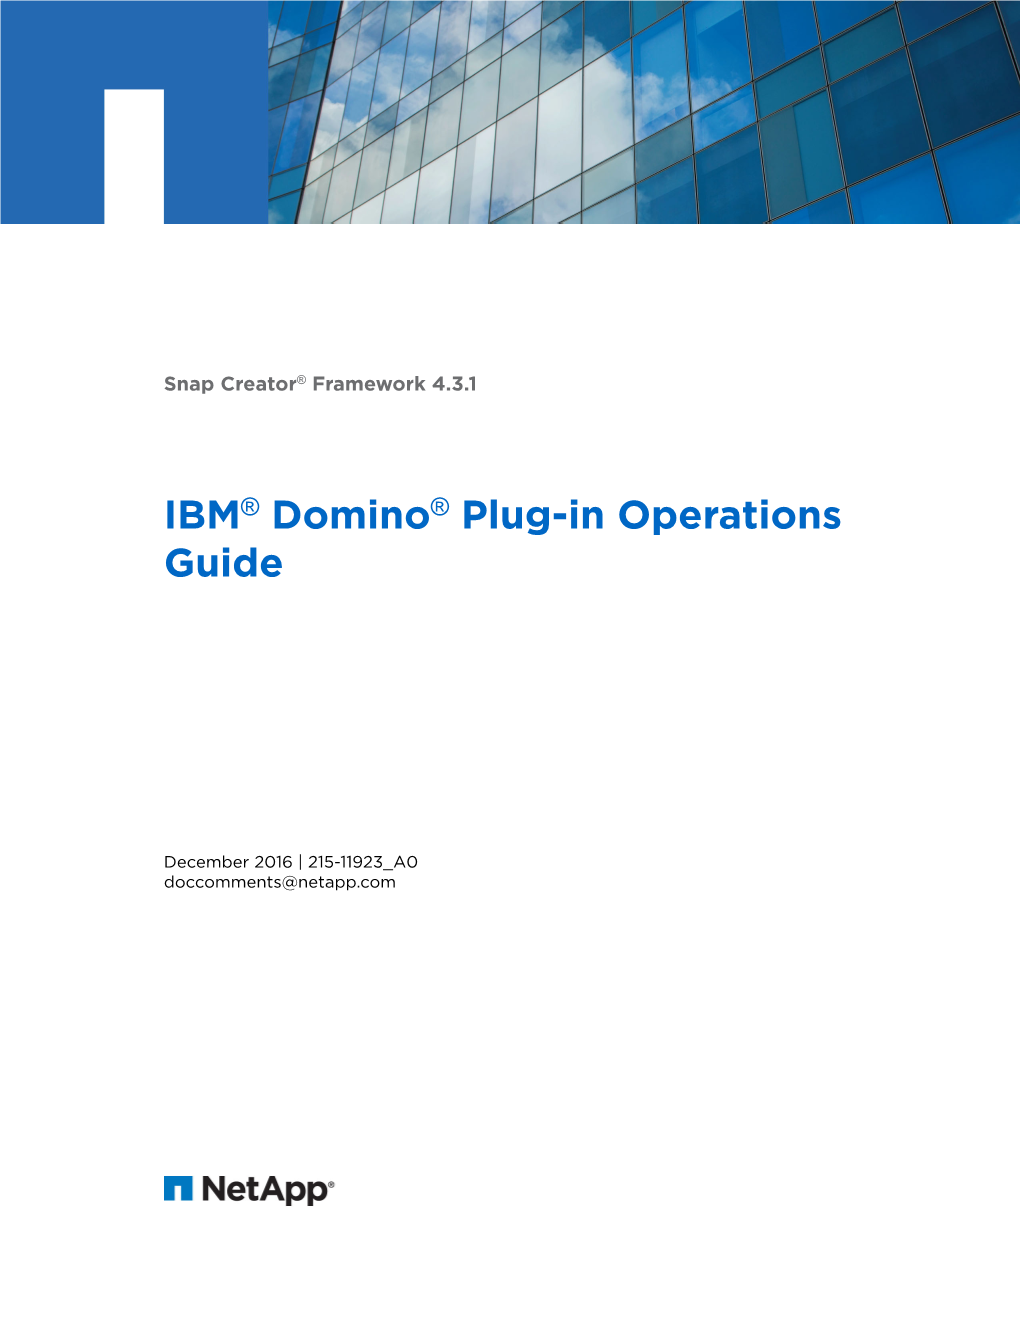 Snap Creator Framework 4.3.1 IBM Domino Plug-In Operations Guide